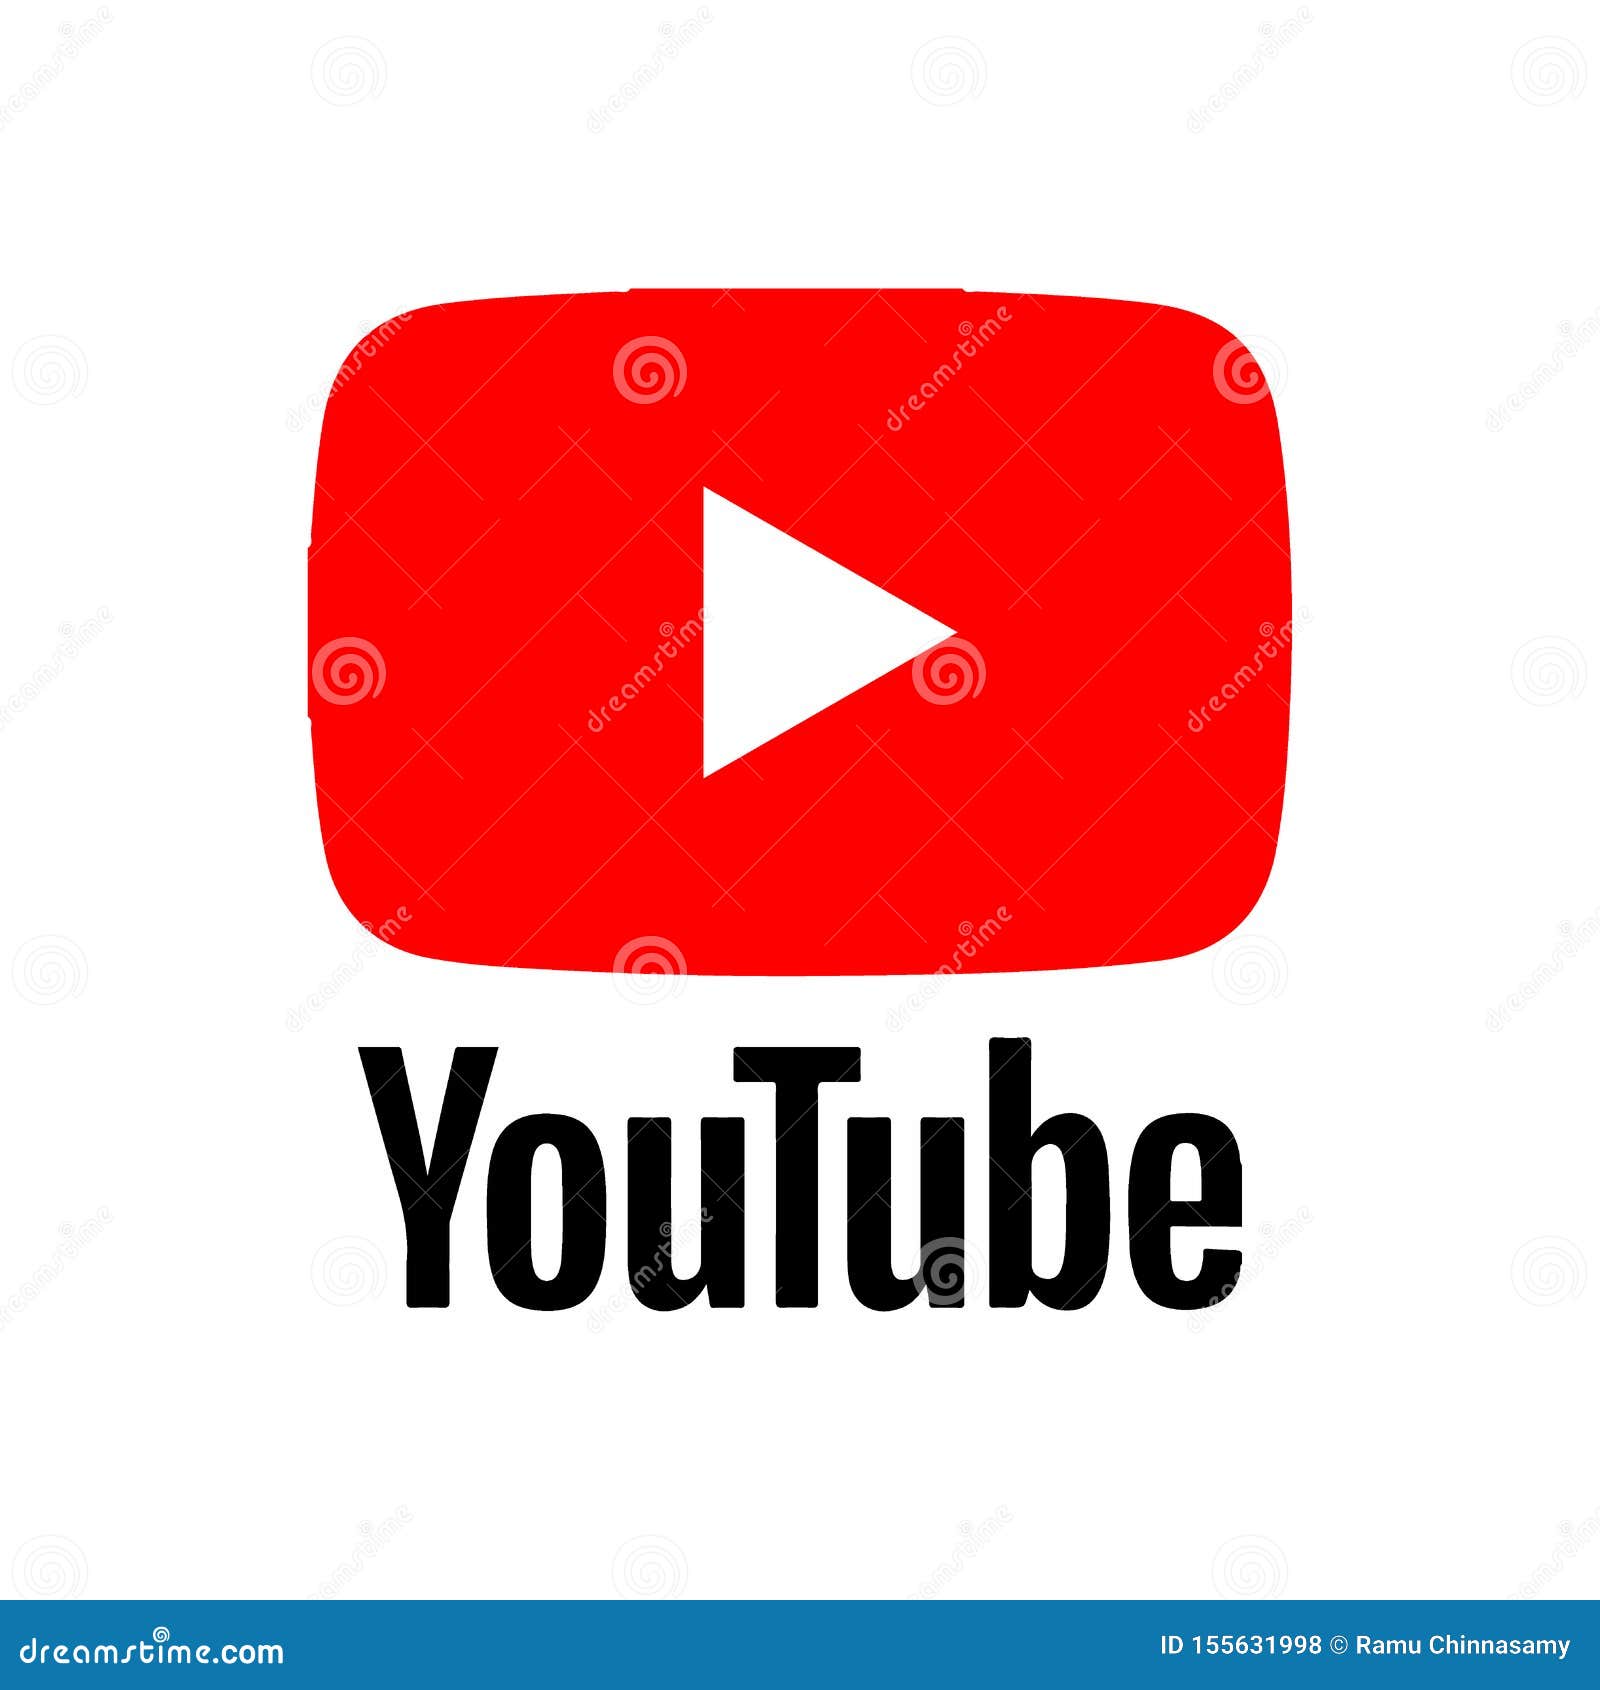 Youtube logo editorial stock photo. Illustration of design - 155631998